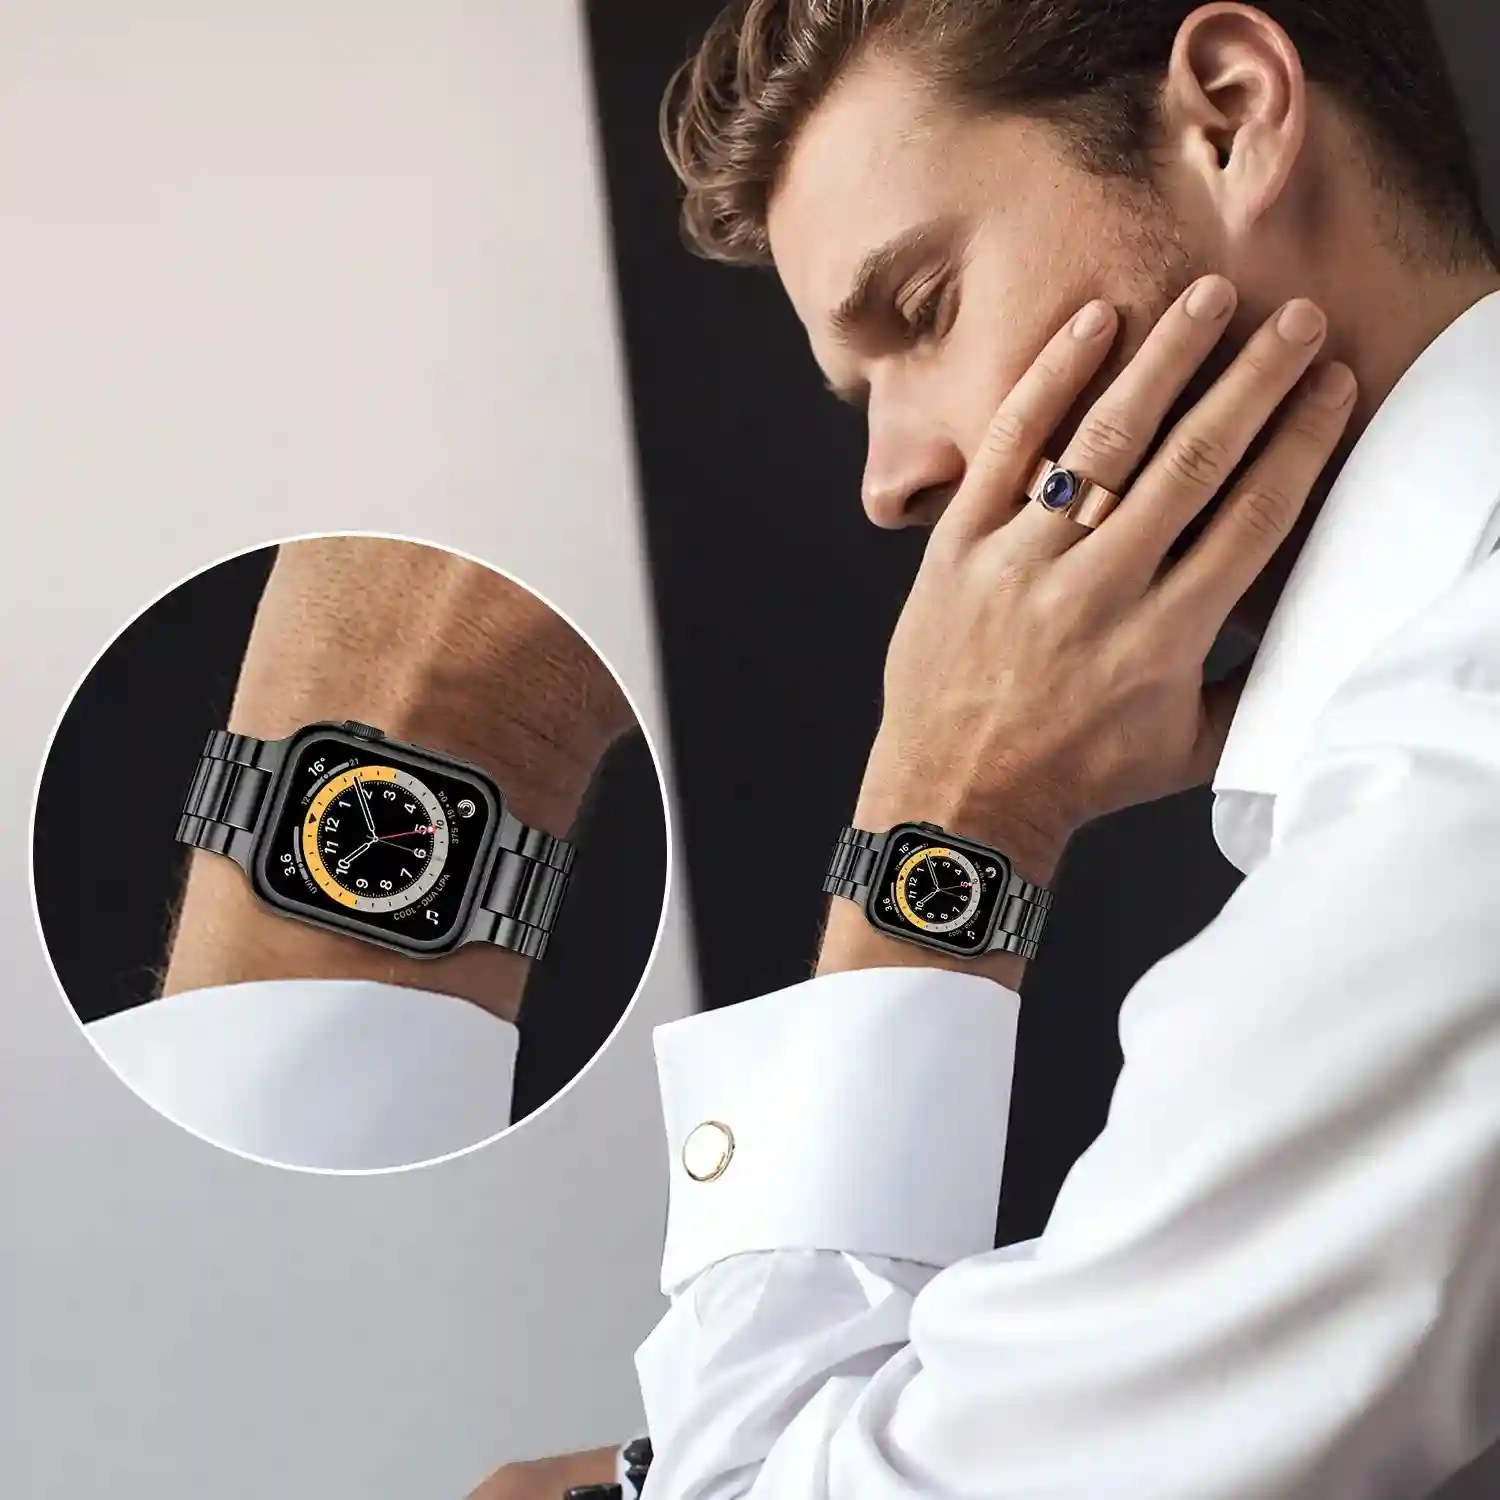 Buy Rolex Chain Smart Watch at best price in Pakistan | Rhizmall.pk